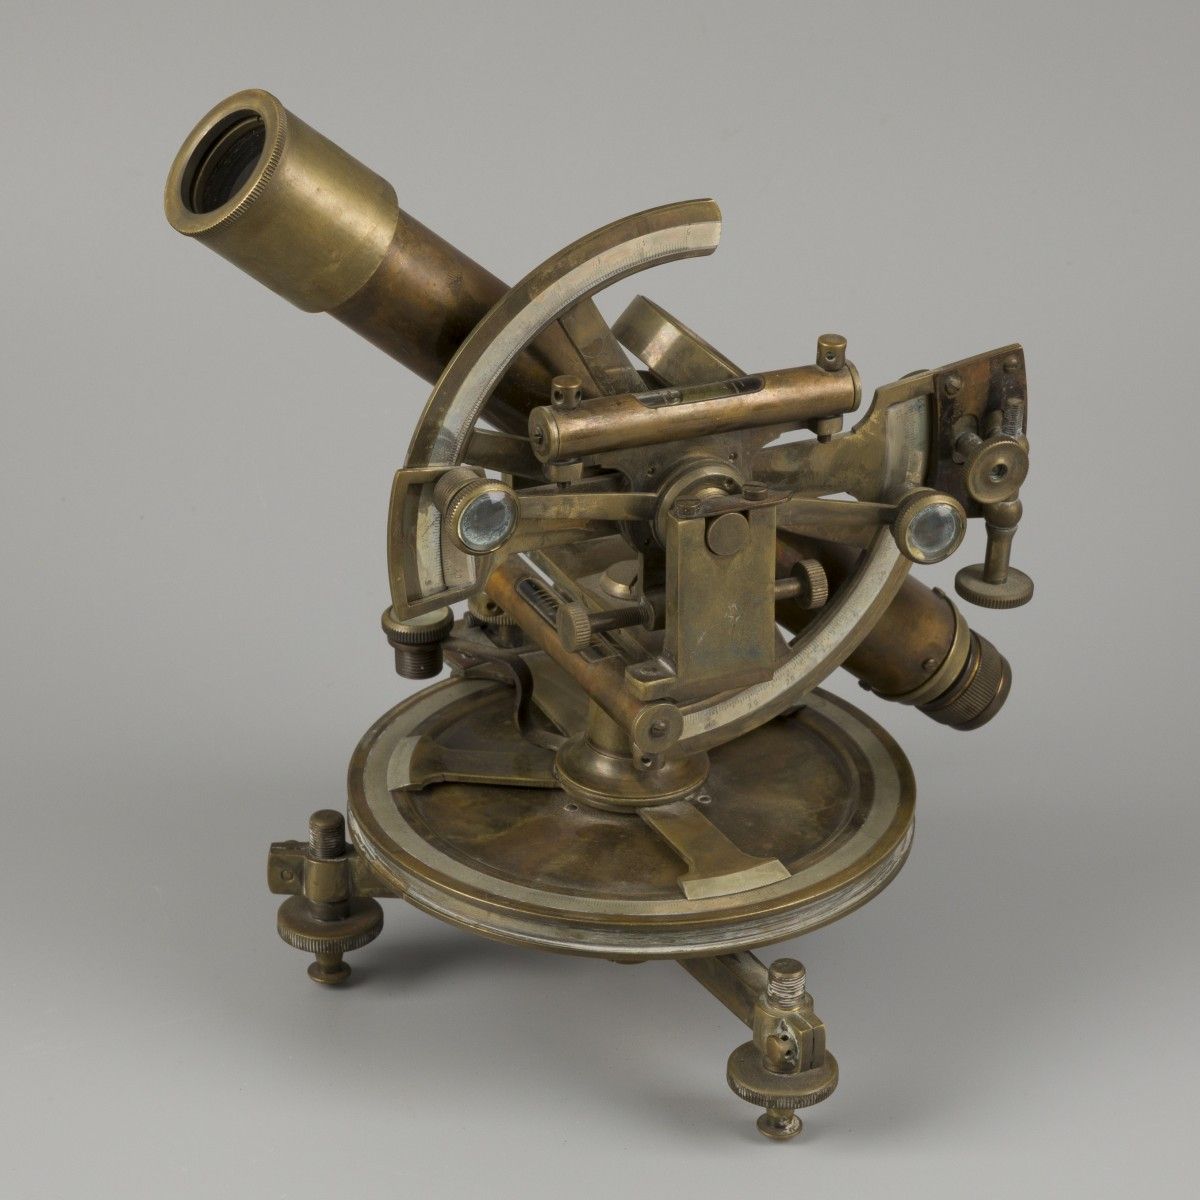 A brass surveyors' spirit level instrument with compass (transit/ theodolite), G&hellip;